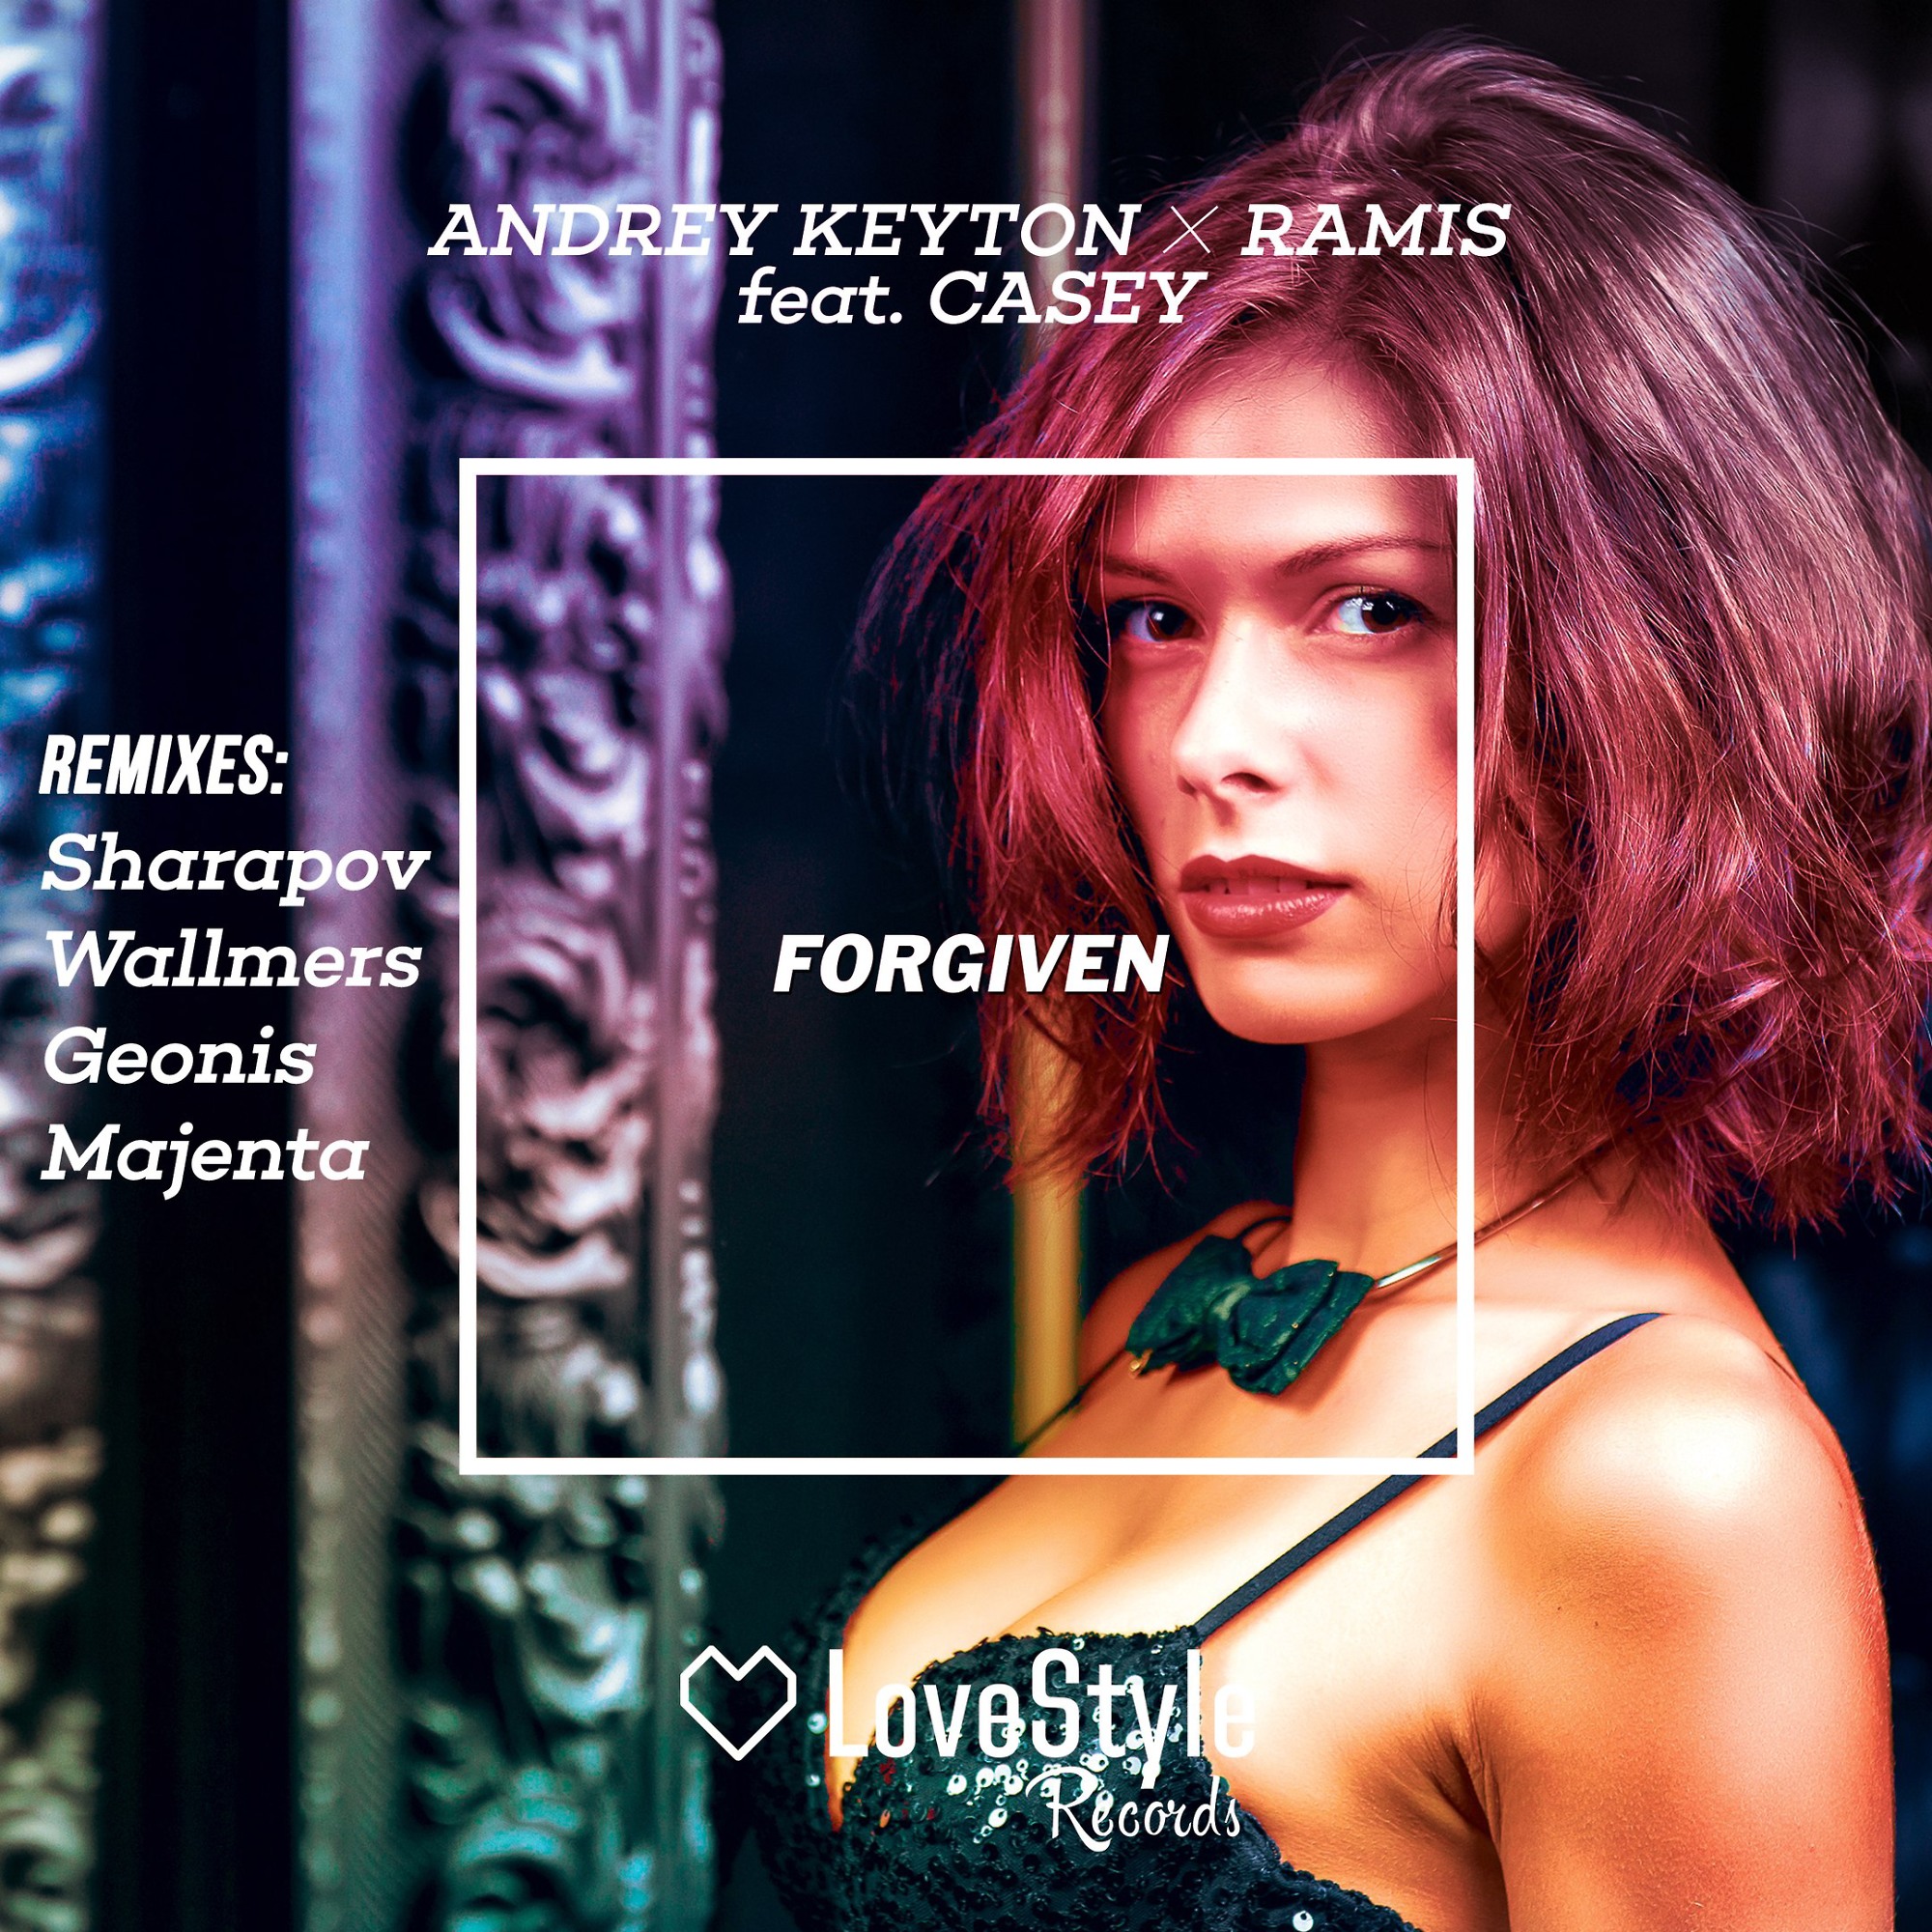 Andrey keyton. Andrey Keyton, Ramis feat Casey - forgiven (Wallmers Remix). Forgiven Wallmers Remix Andrey Keyton,.